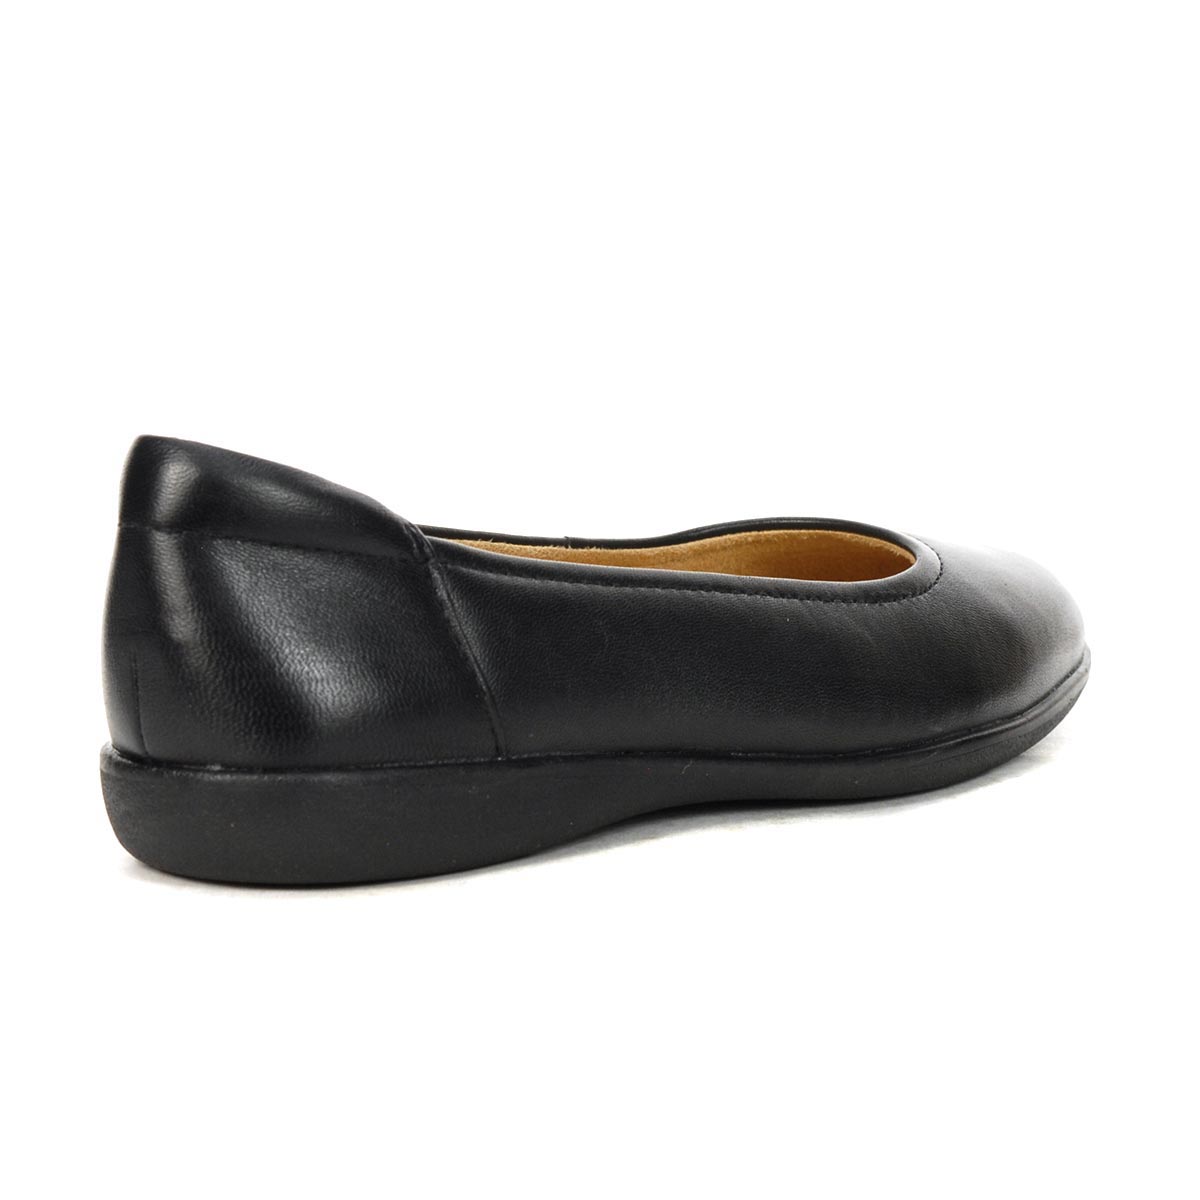 Naturalizer Shoes Black Flats Outlet | bellvalefarms.com